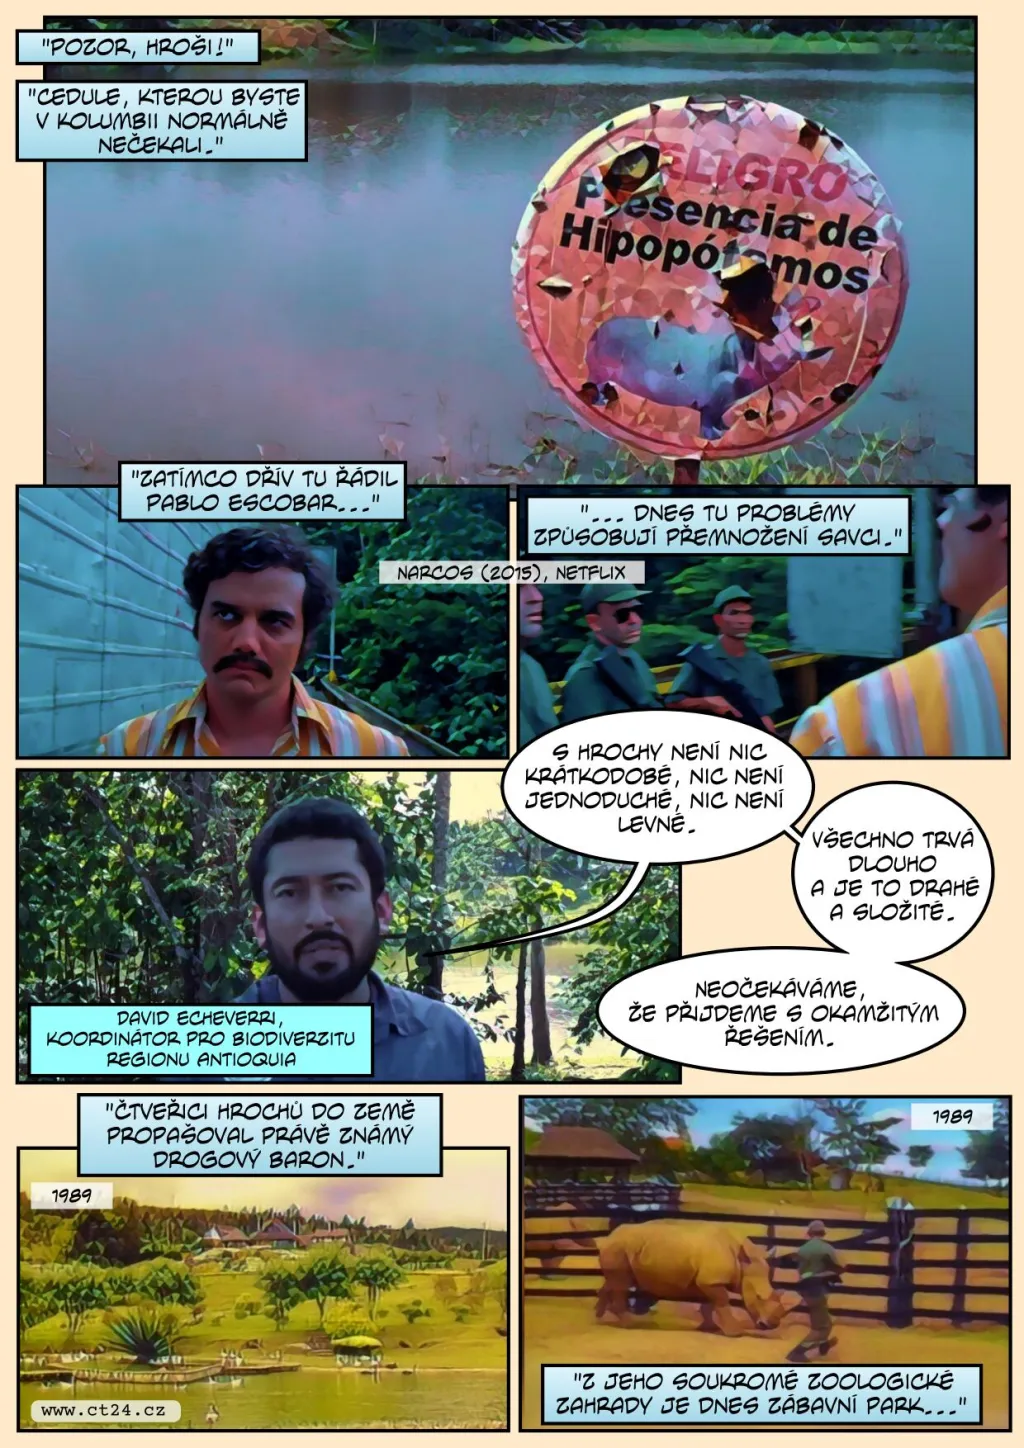 V Kolumbii se přemnožili Escobarovi hroši